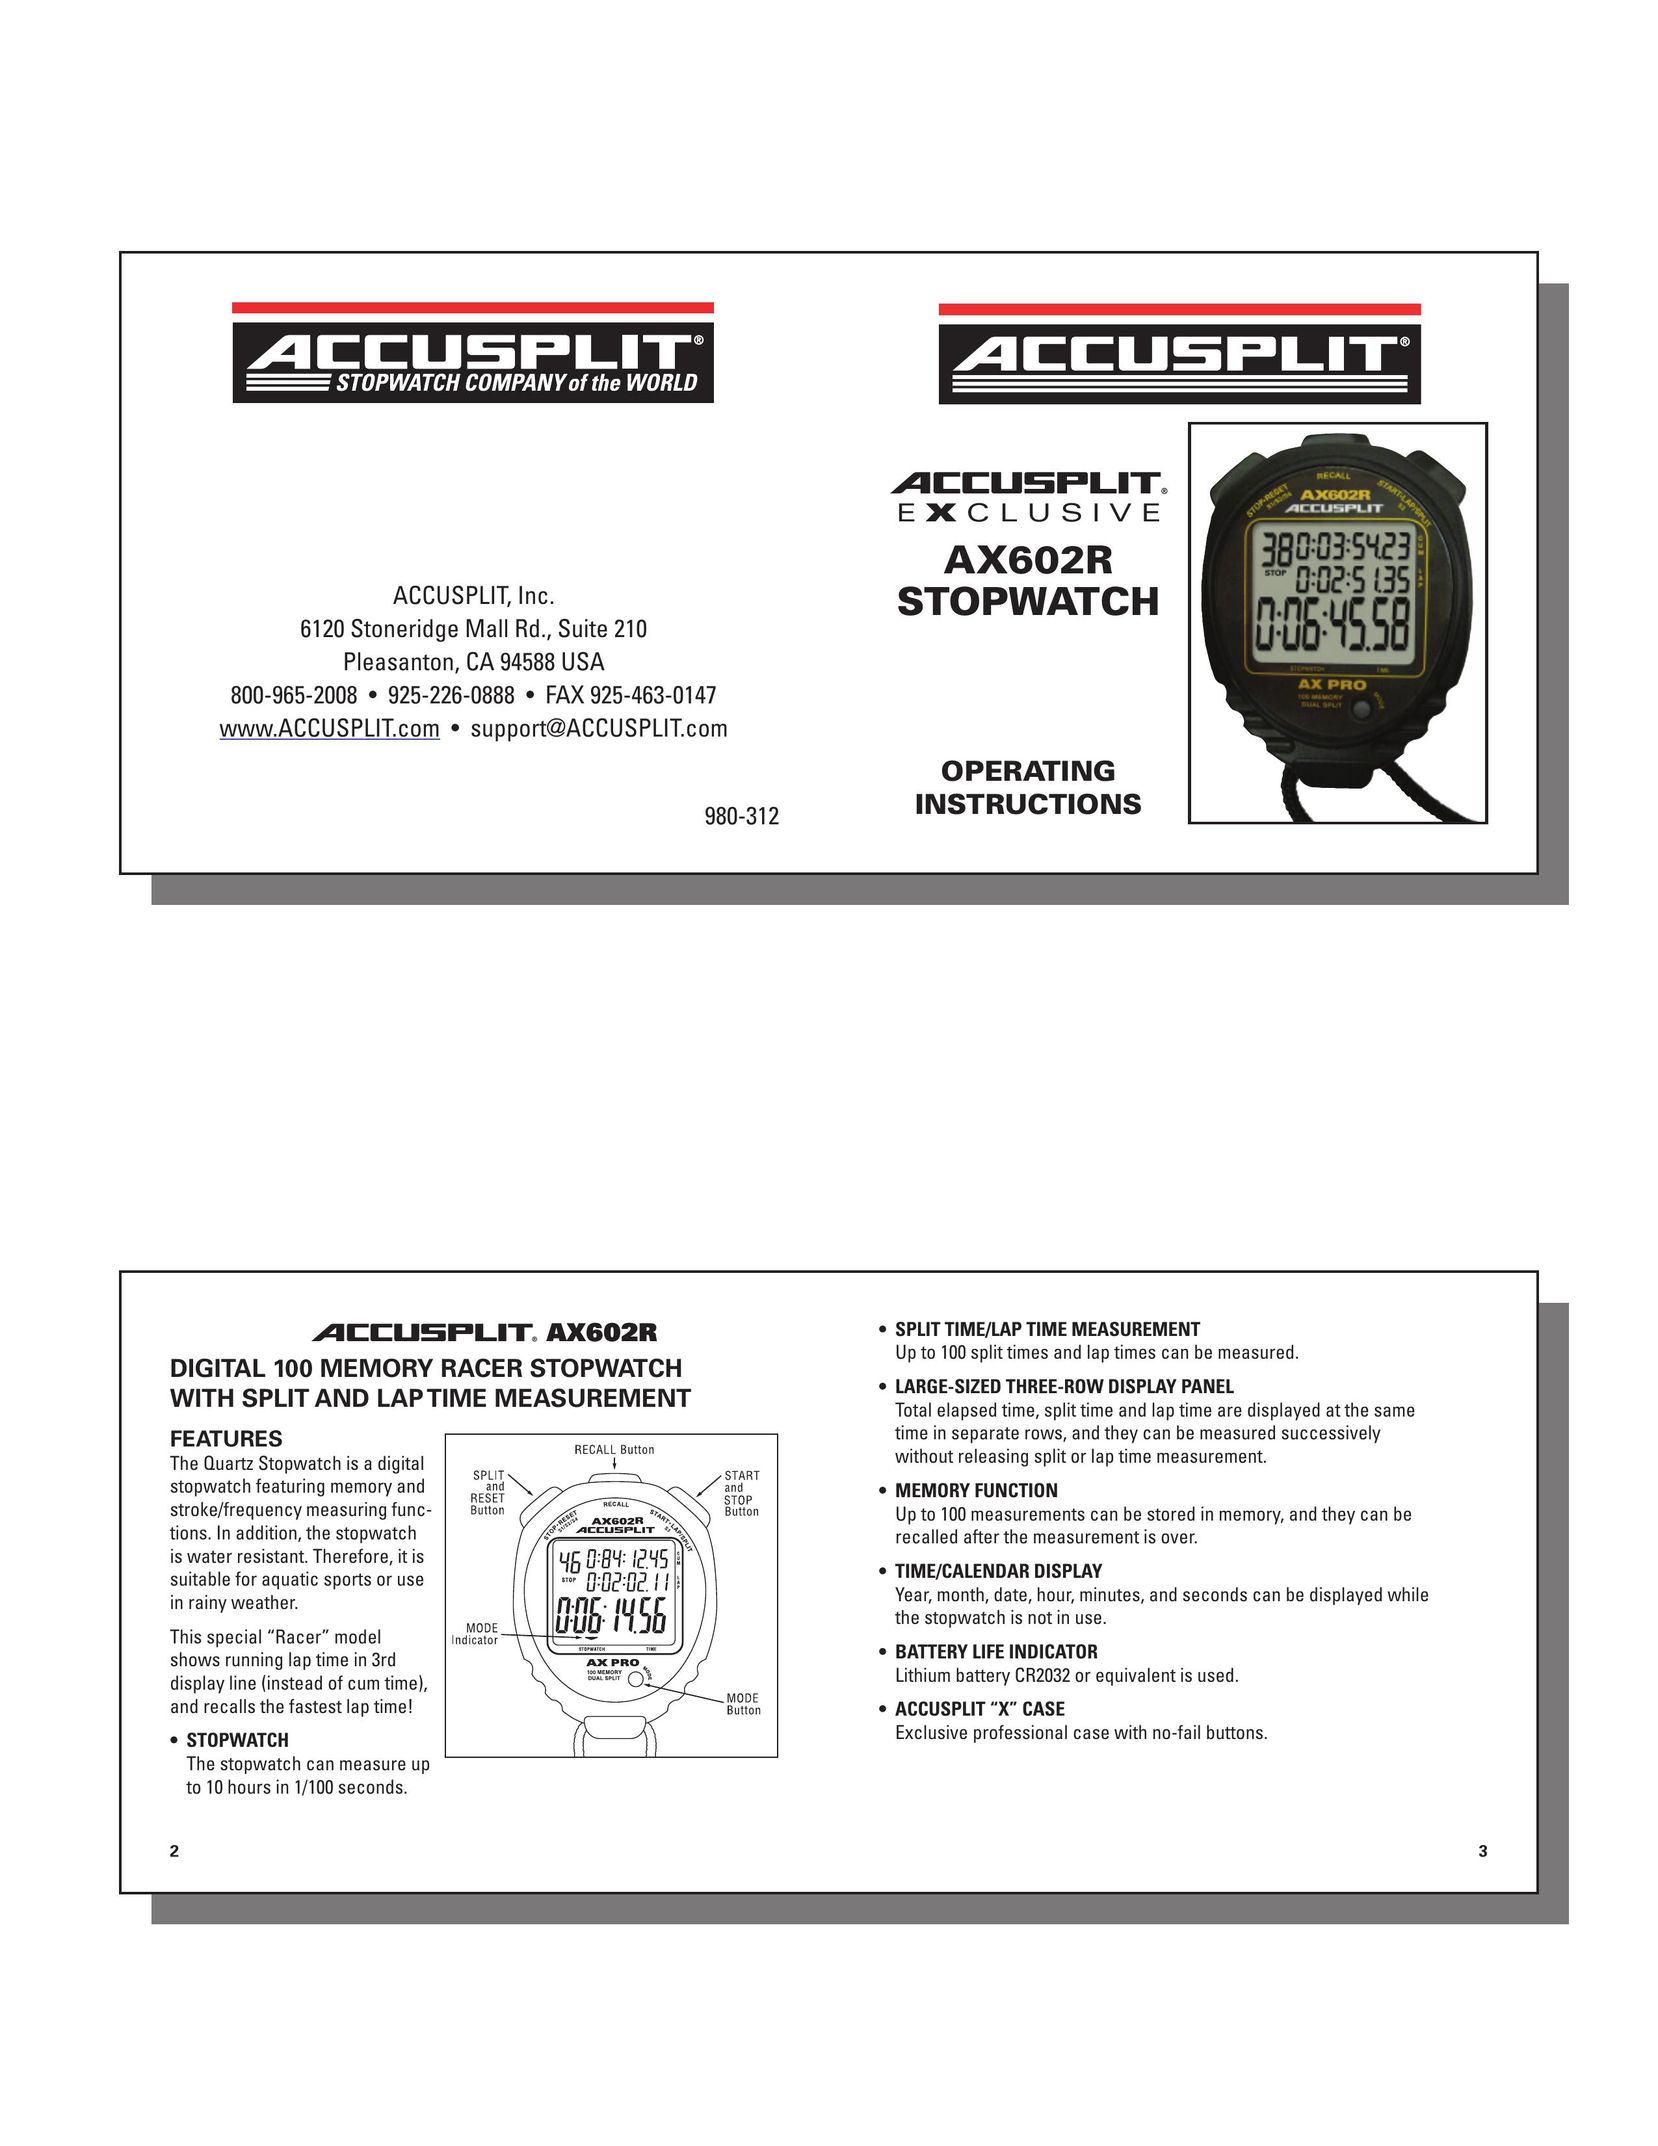 Accusplit AX602R Heart Rate Monitor User Manual